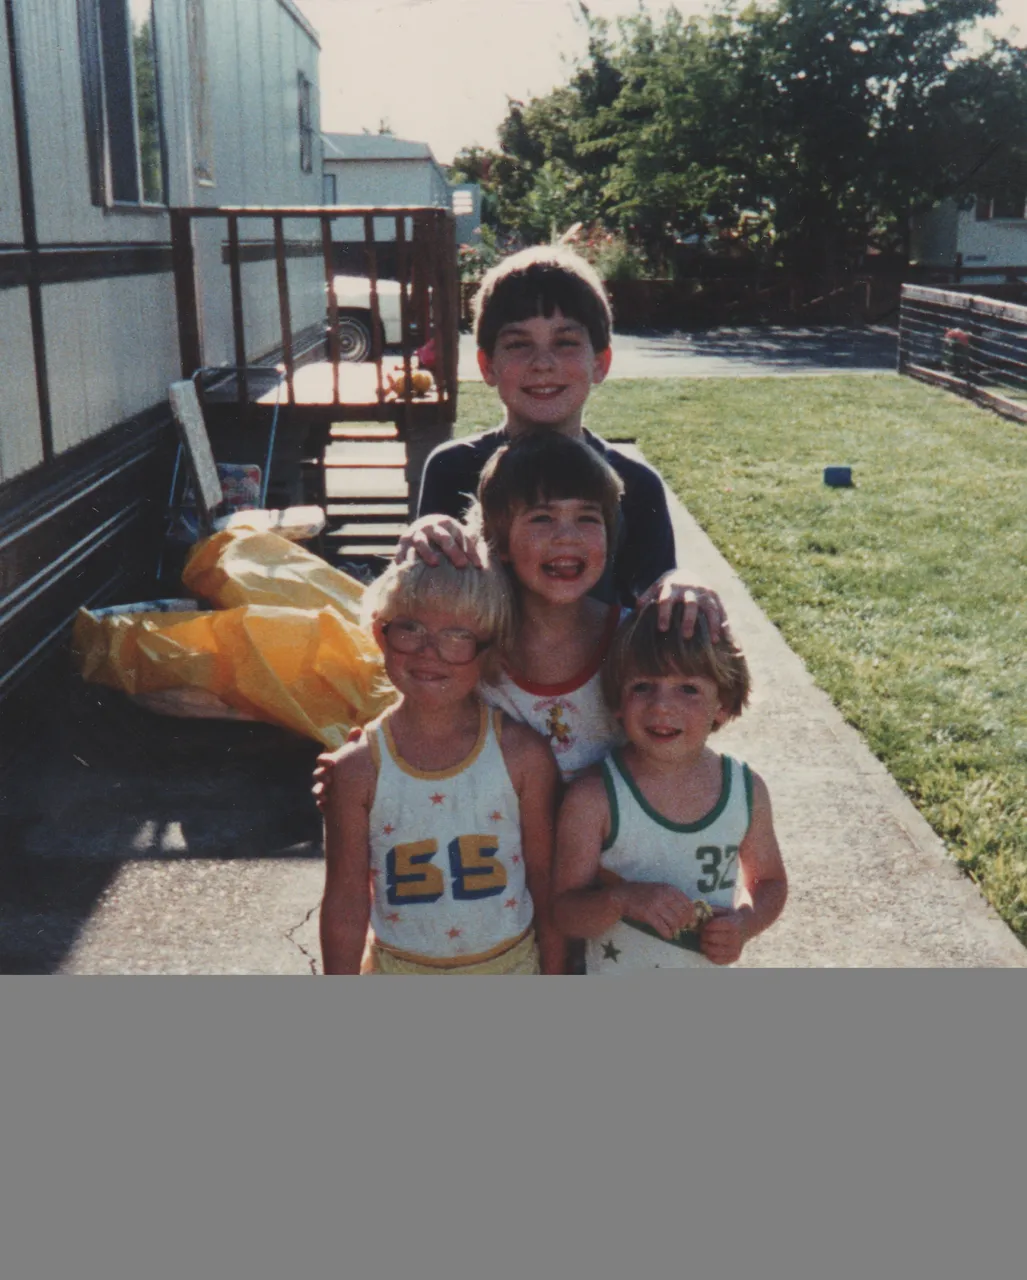 1985-08-16 - Friday - Nathan, Alan, Katie, Rick at our 163 house, front yard.jpg